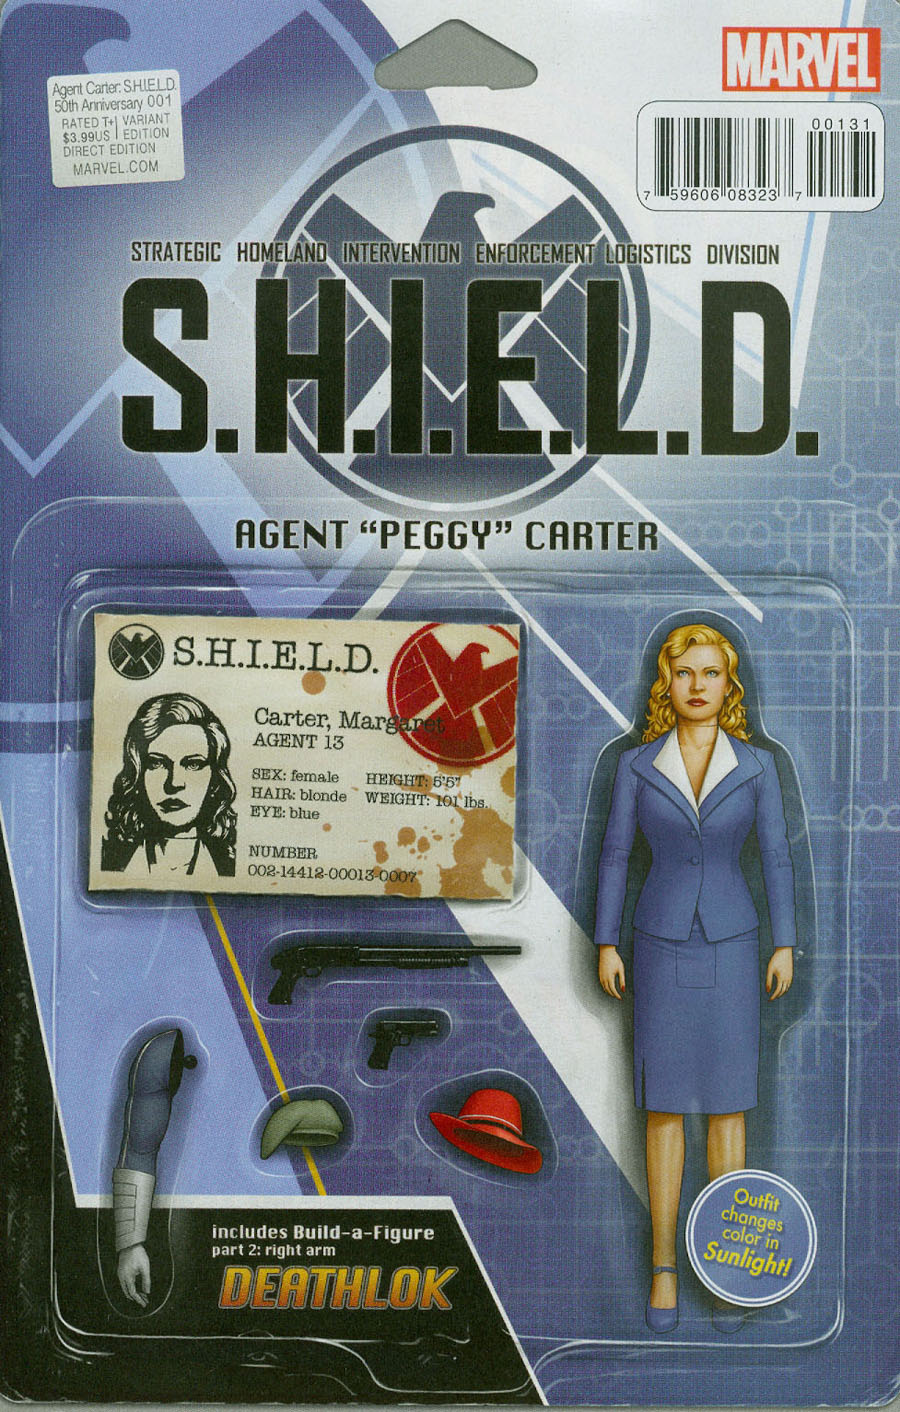 Agent Carter S.H.I.E.L.D. 50th Anniversary #1 Cover C Variant John Tyler Christopher Action Figure Cover